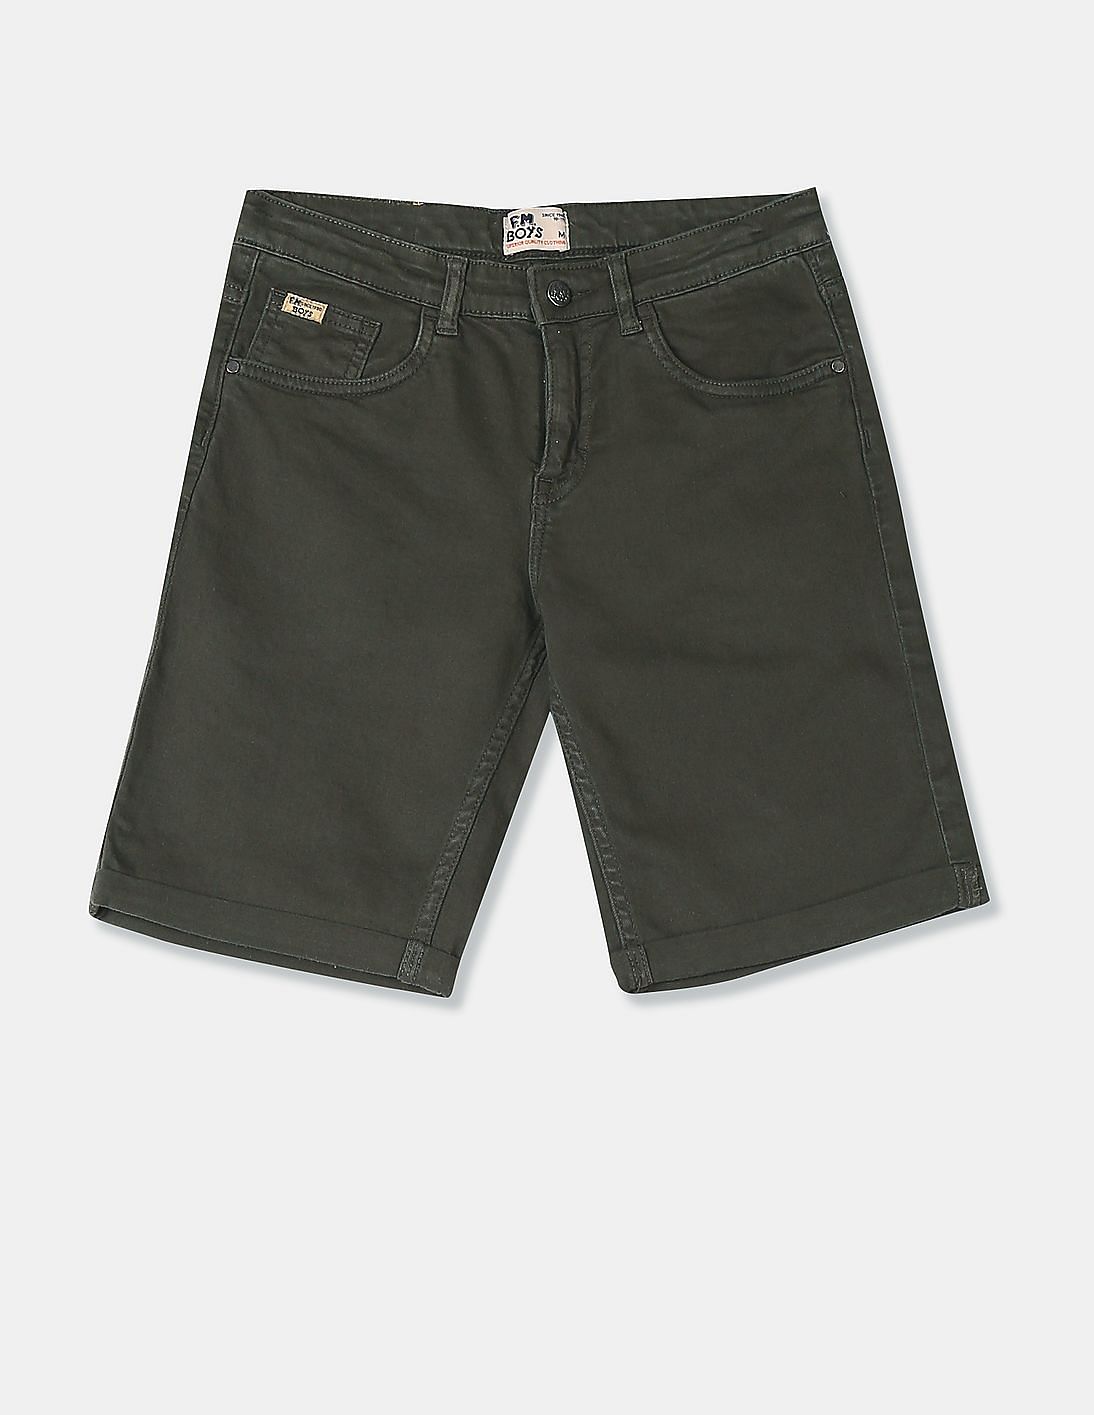 Buy FM Boys Boys Green Regular Fit Denim Shorts - NNNOW.com